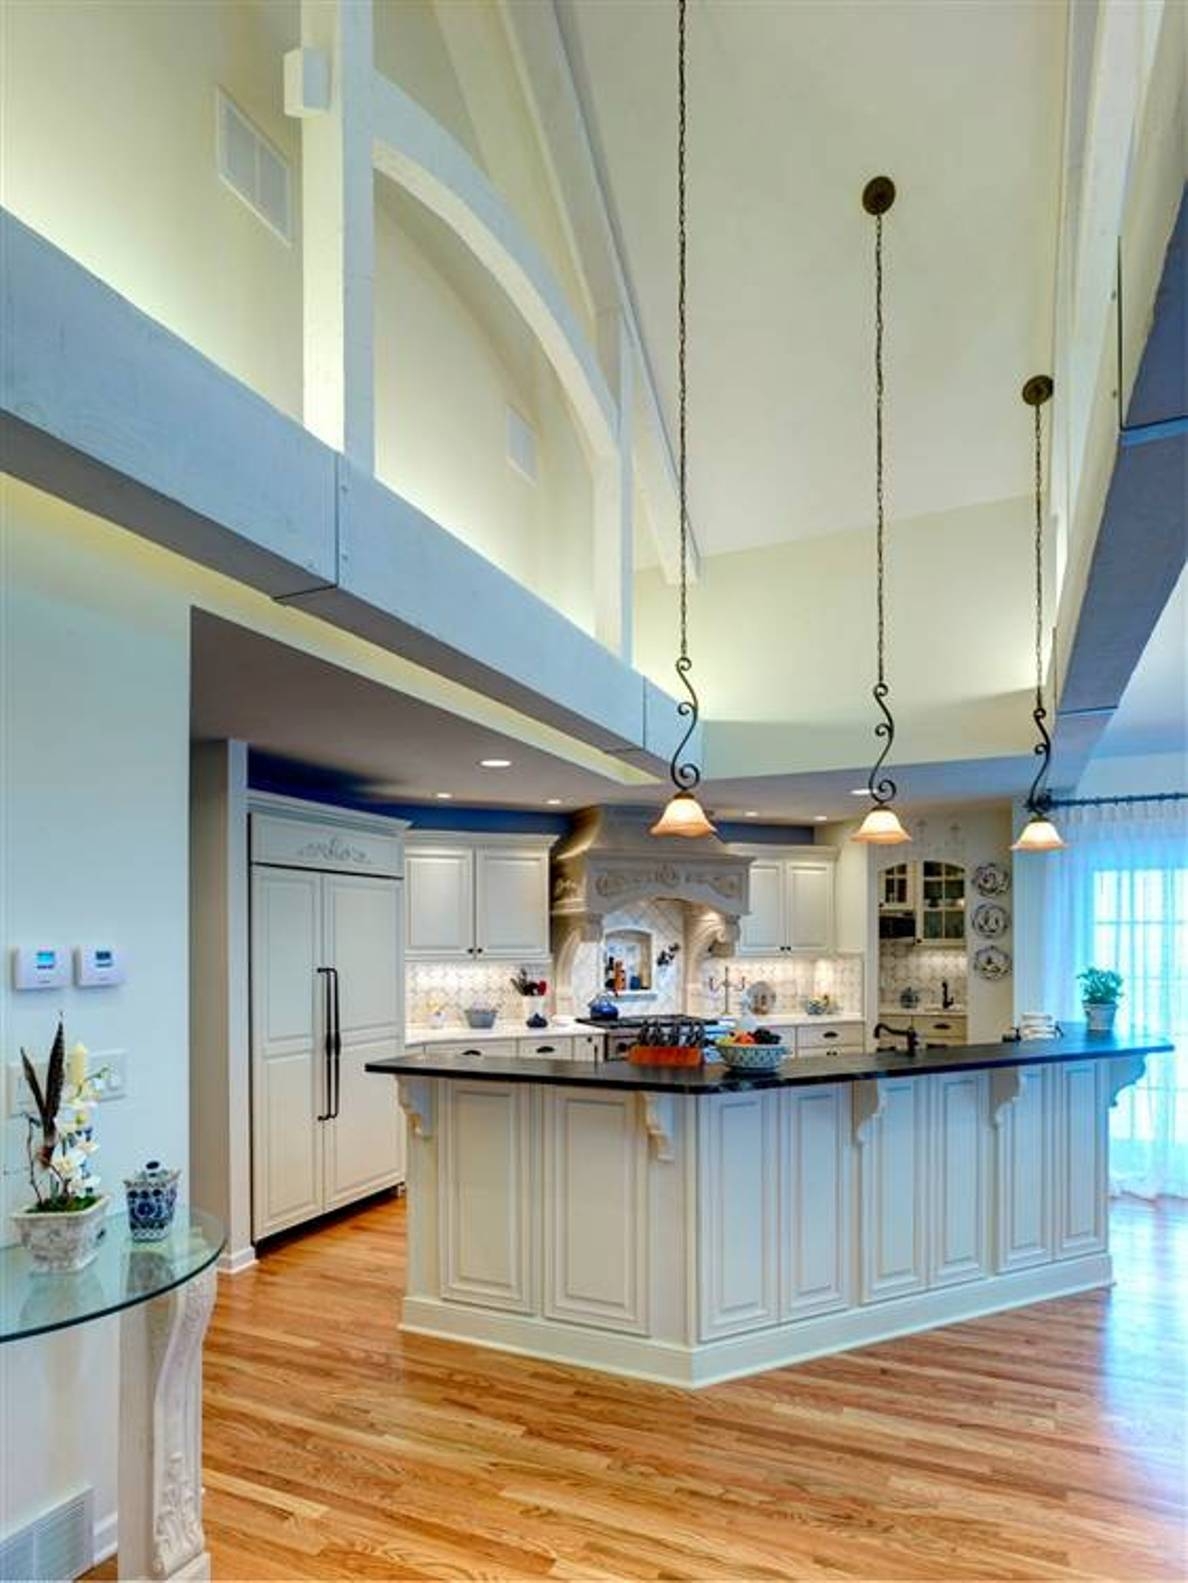 Pendant Lighting For Very High Ceilingskitchens kitchen lighting ideas for high ceilings inspirations